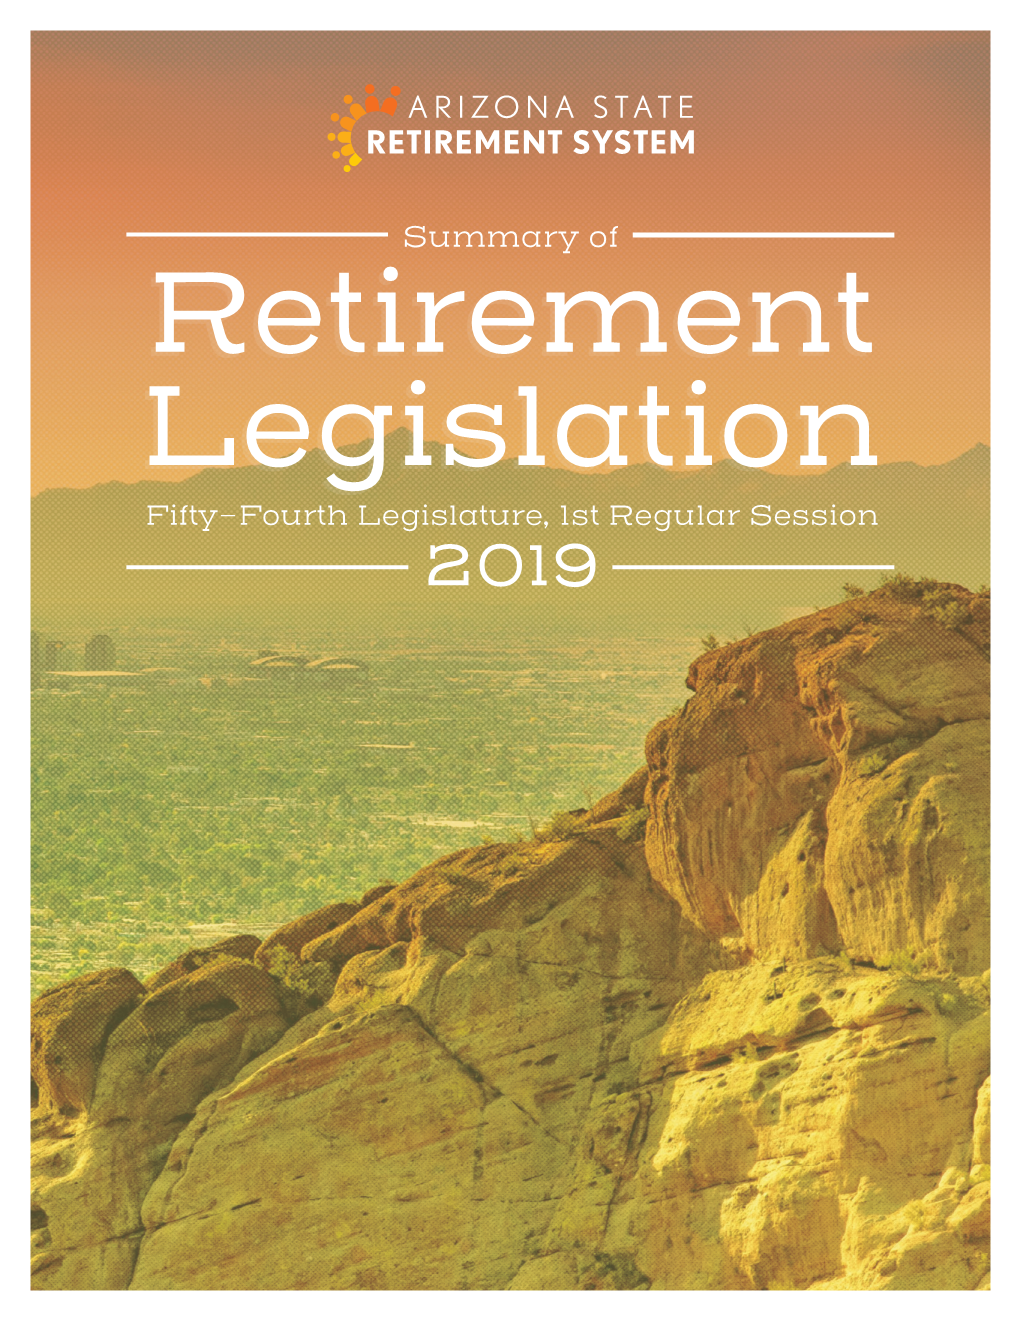 Summary of 2019 Retirement Legislation